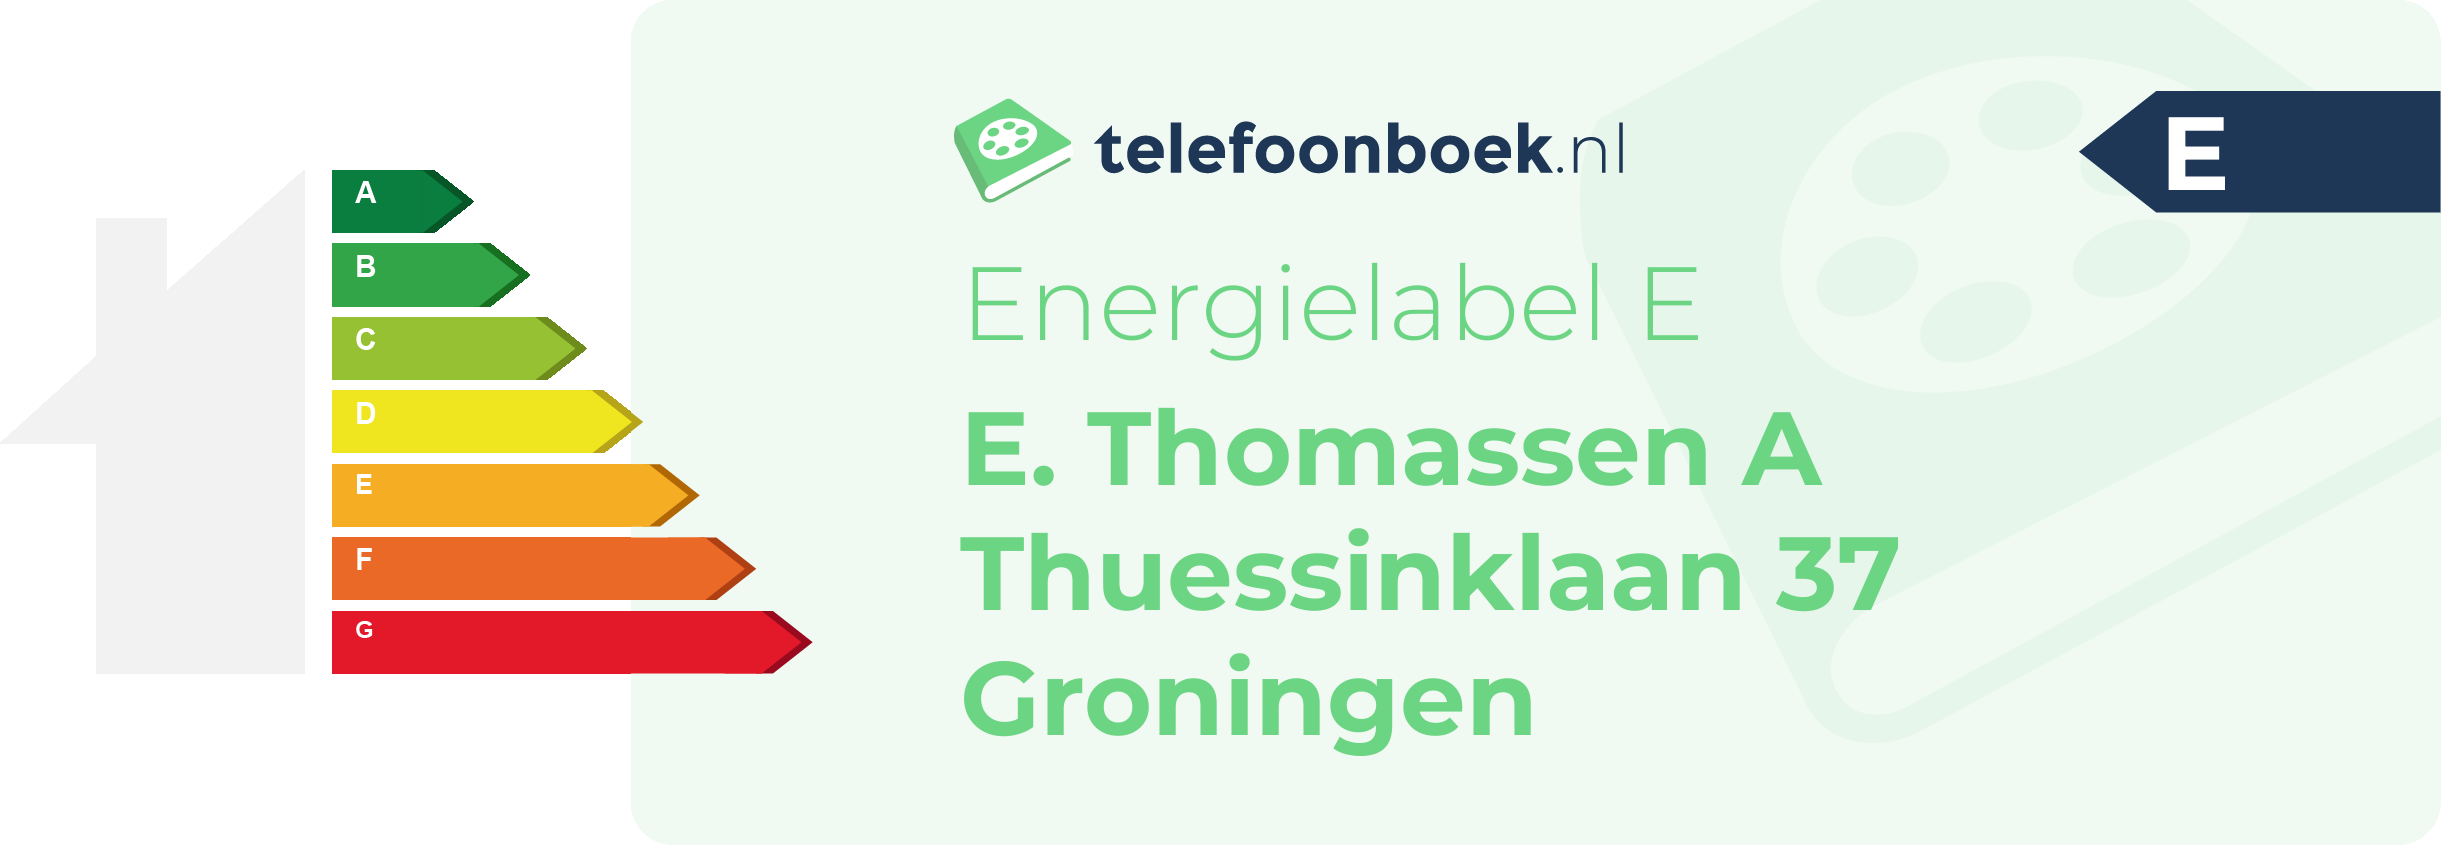 Energielabel E. Thomassen A Thuessinklaan 37 Groningen